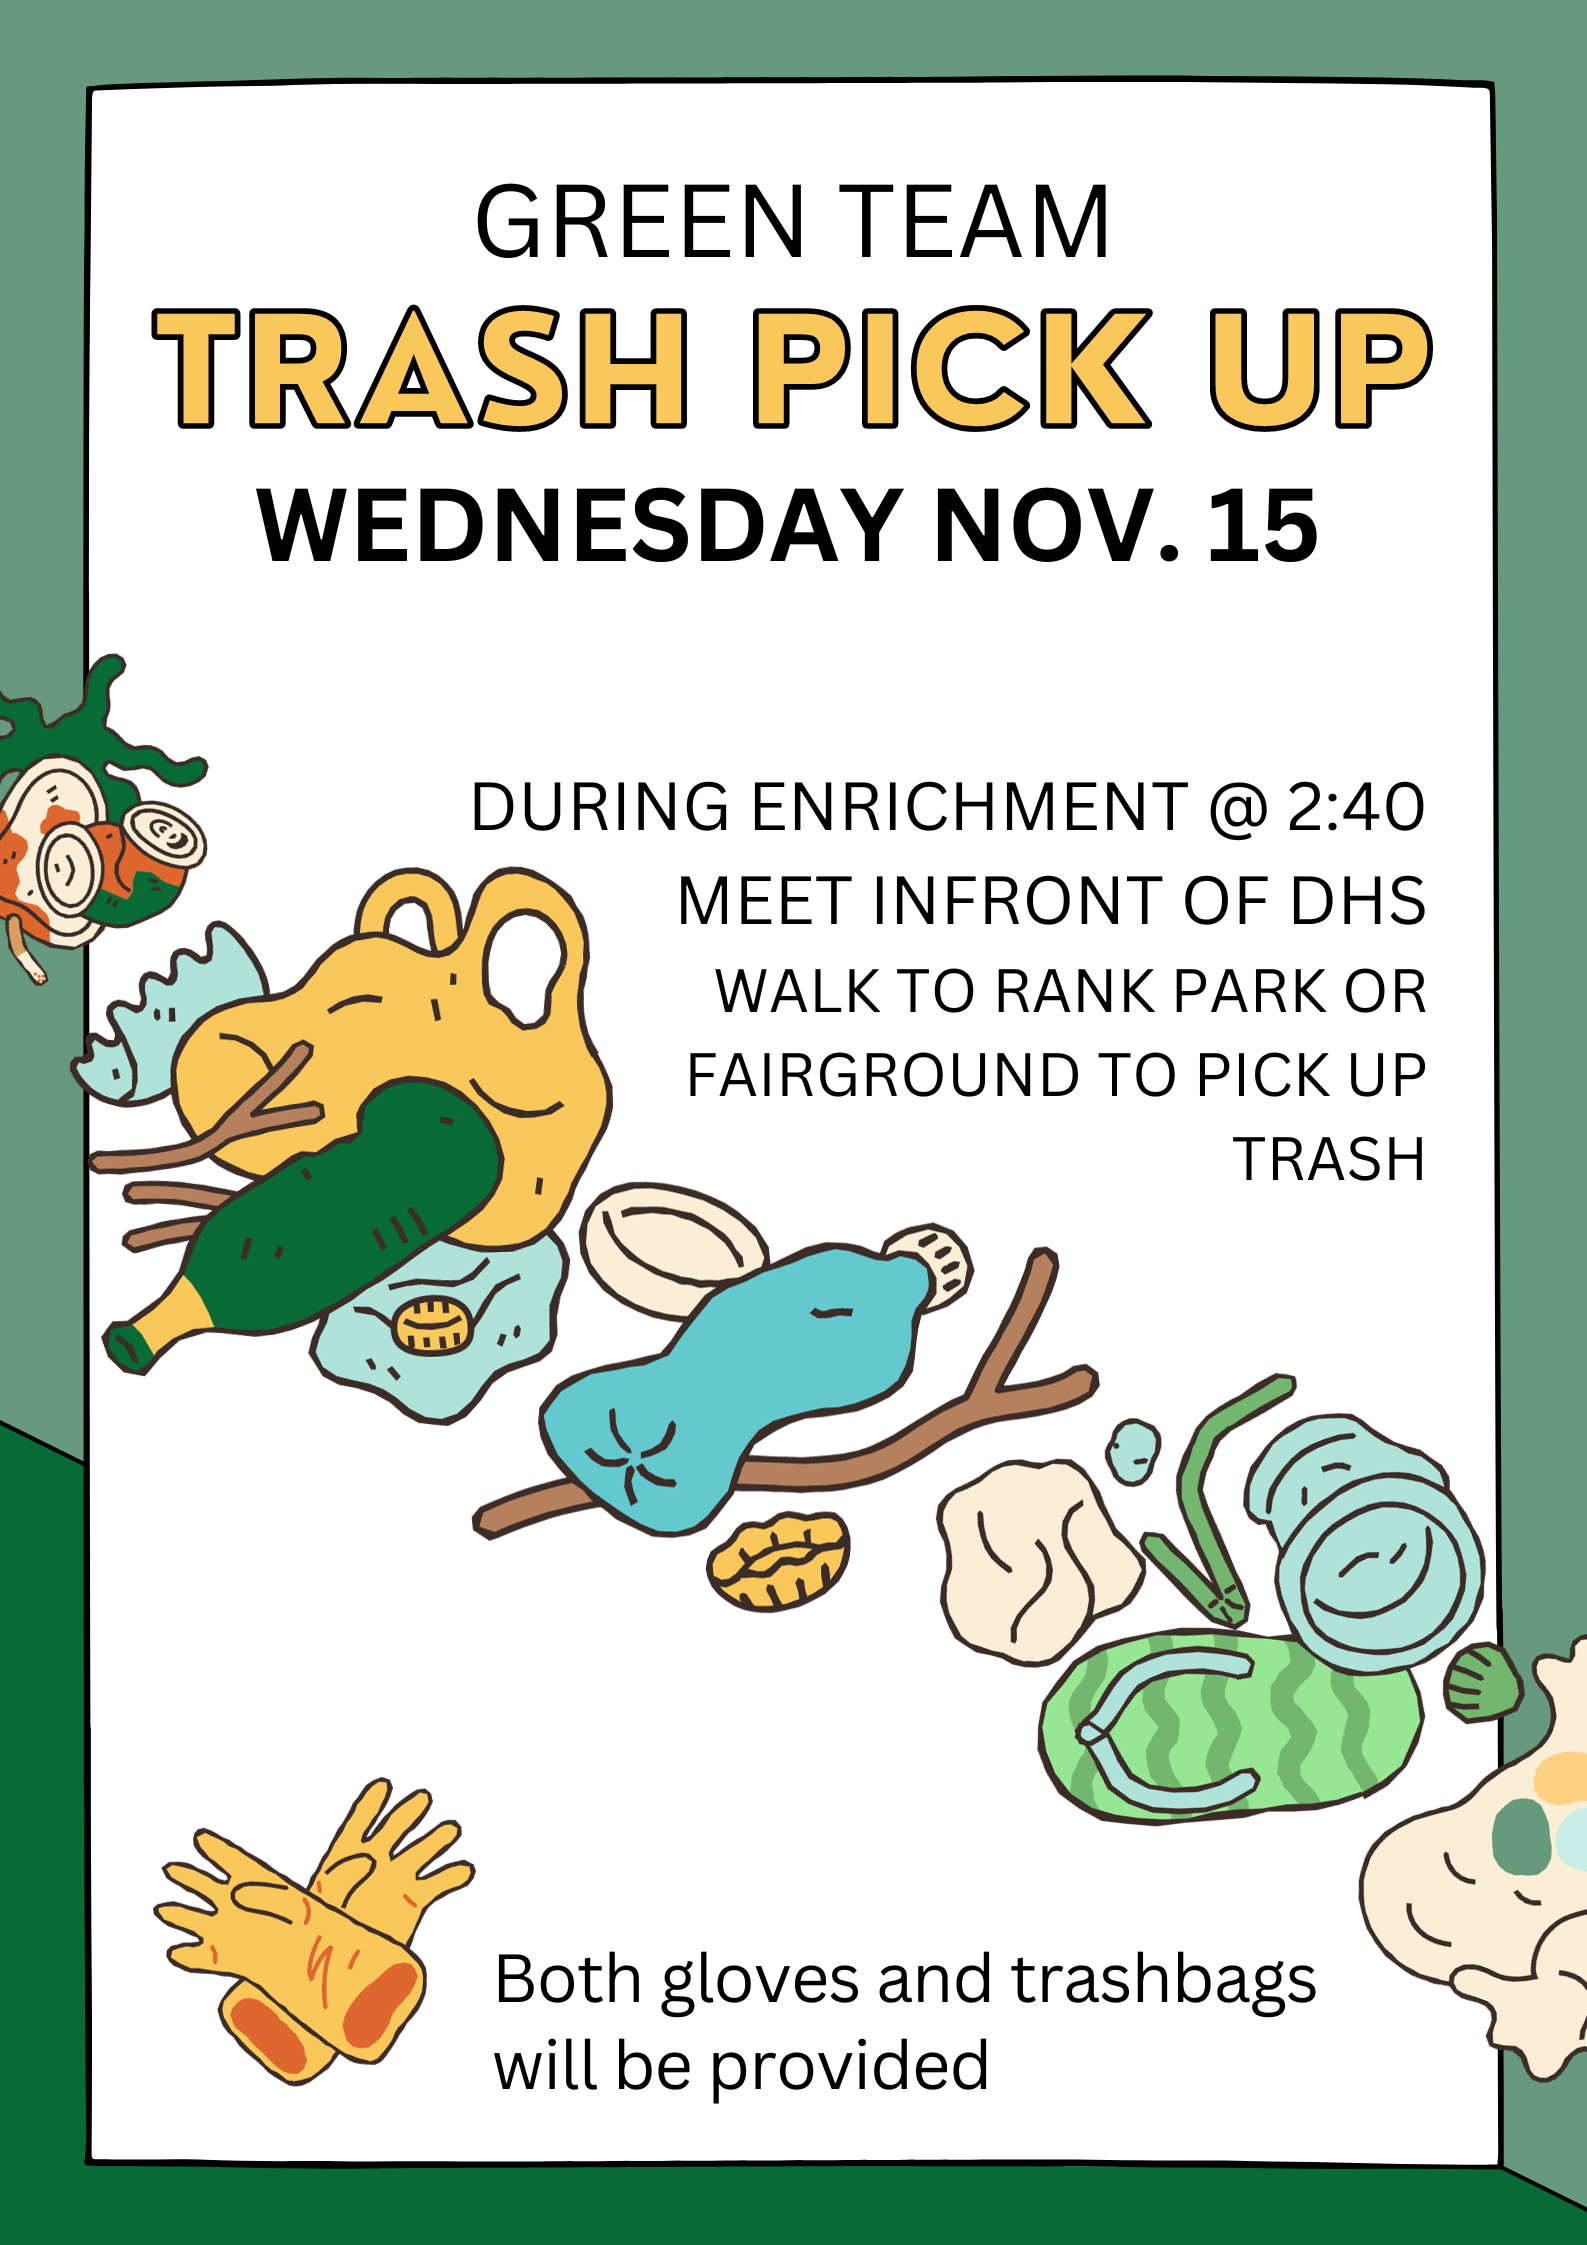 Green Team trash pickup flyer